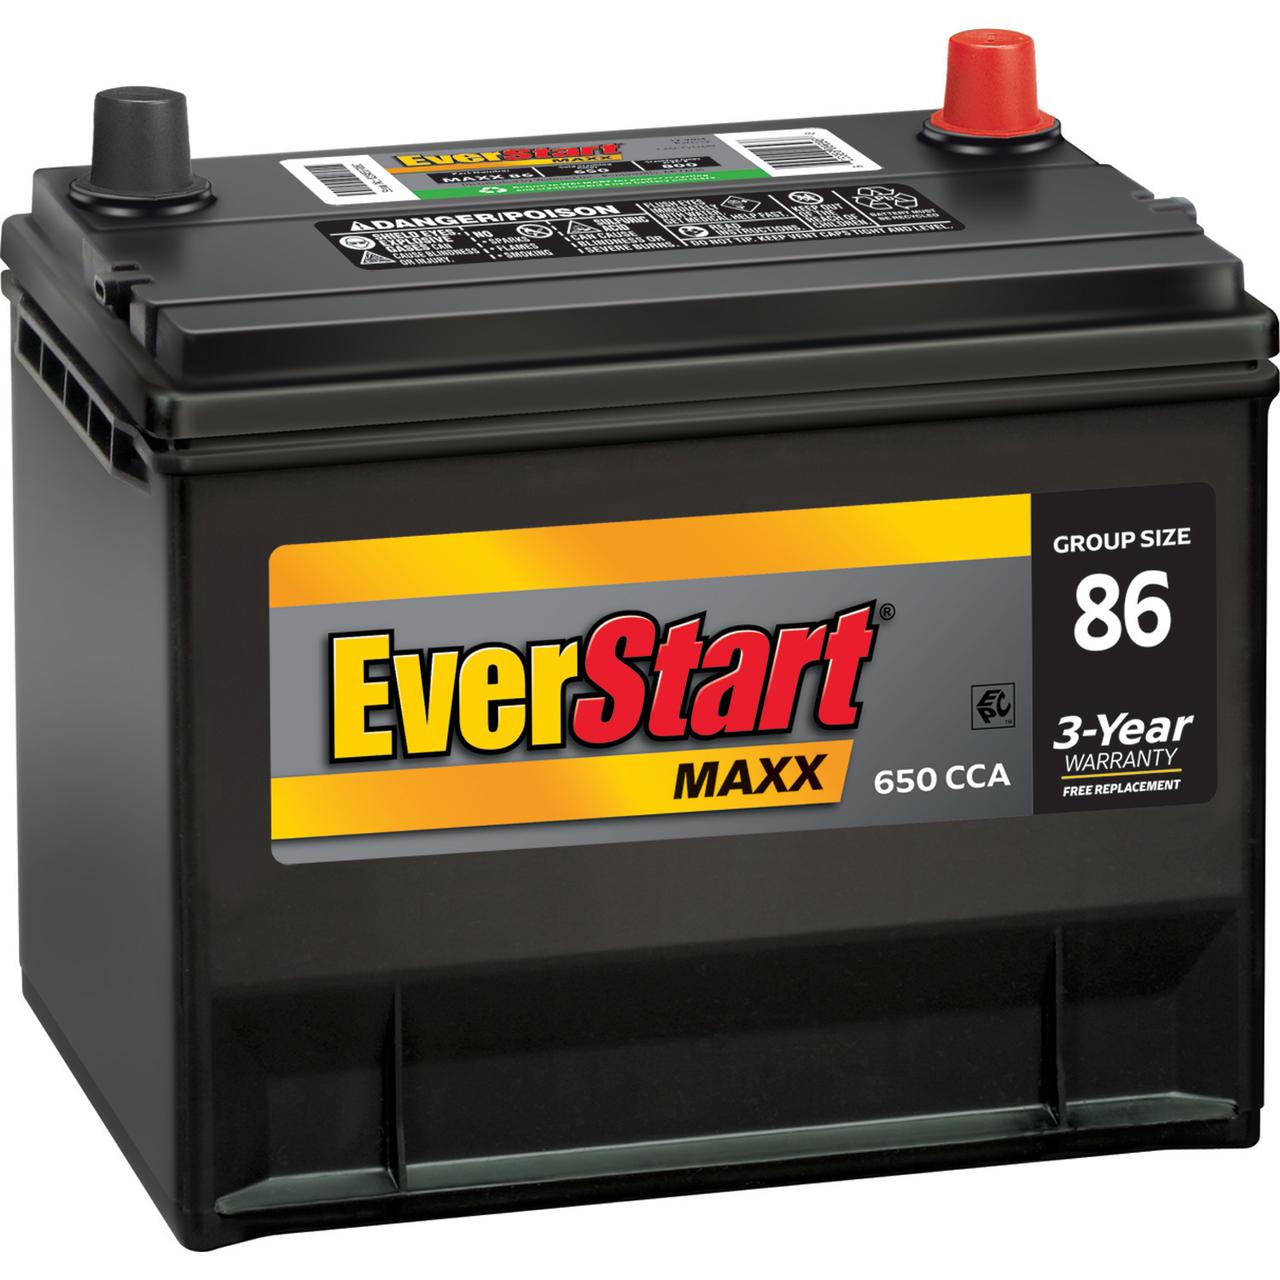 EverStart Maxx Lead Acid Automotive Battery, Group Size 86 12 Volt, 650 CCA - image 1 of 7